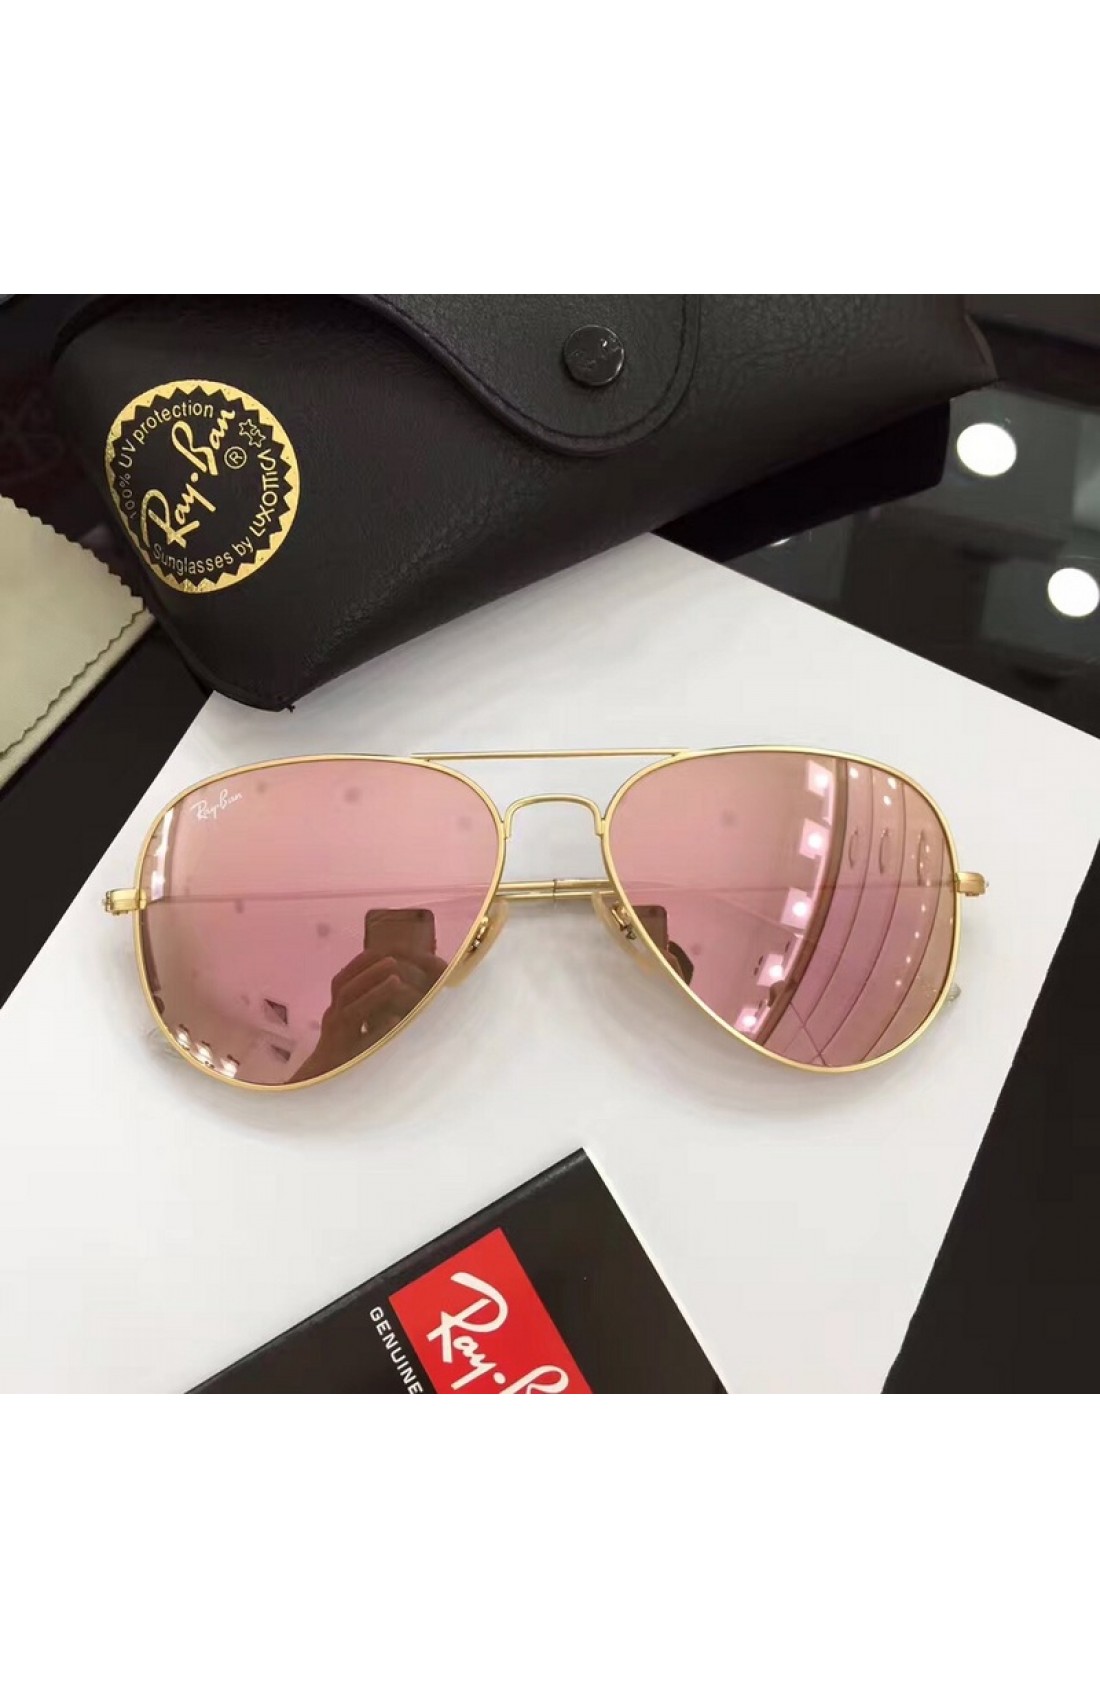 Ray Ban aviator Sunglasses Pink